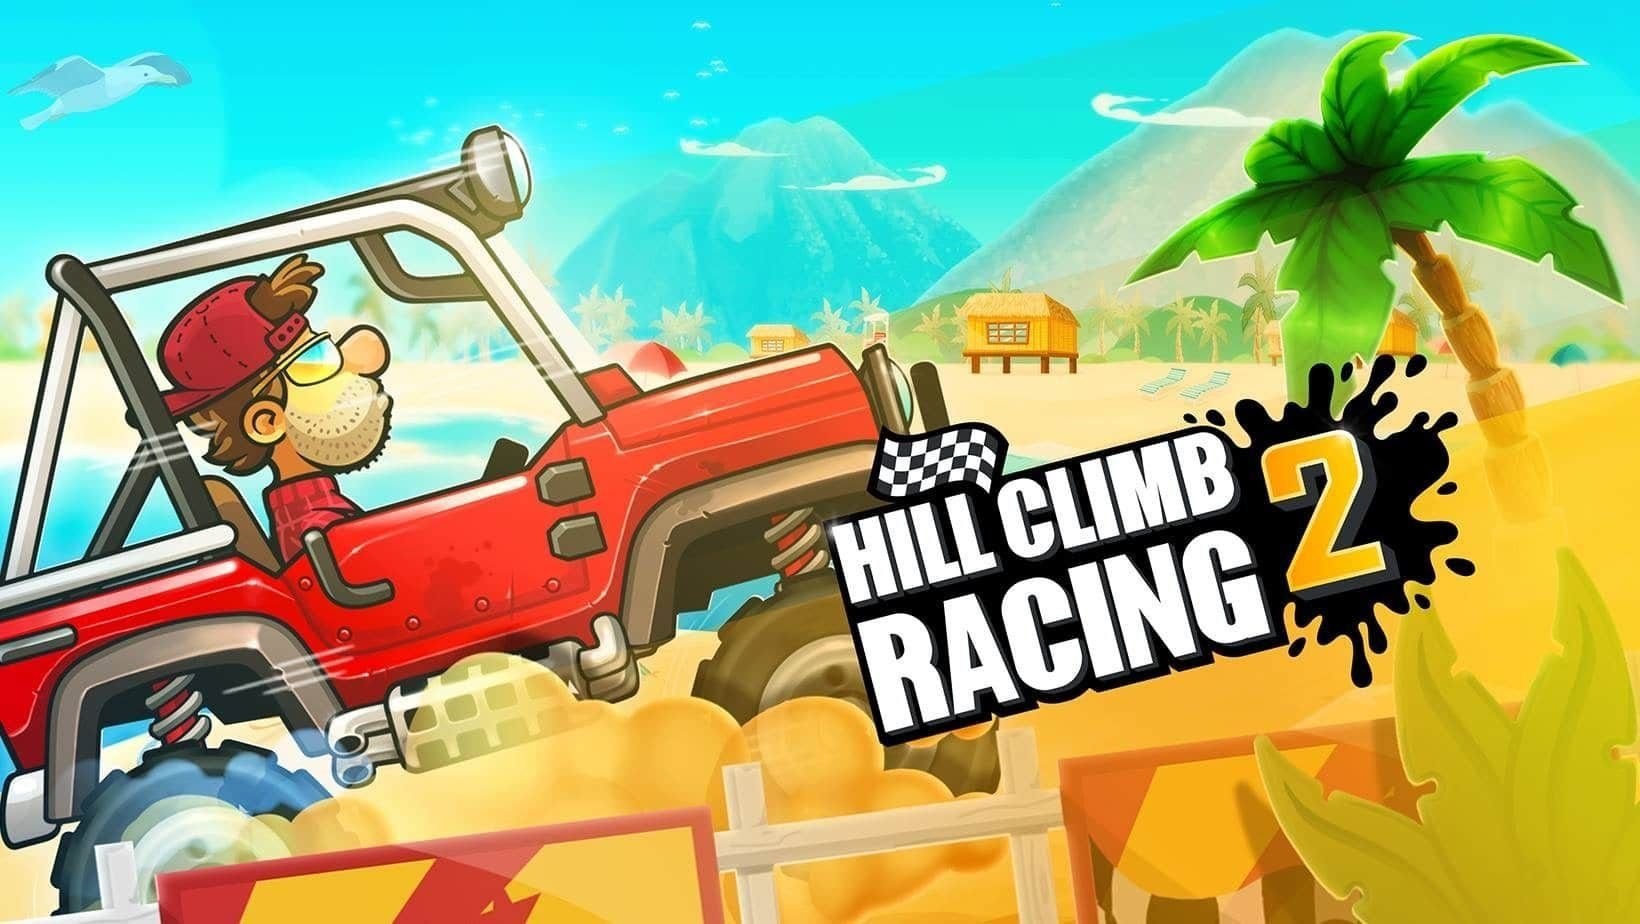 Cars climb racing. Игра Hill Climb Racing 2. Хилл климб рейсинг 2 последняя версия. Hill Climb Racing машинки. Хилл климб рейсинг 2 машины.